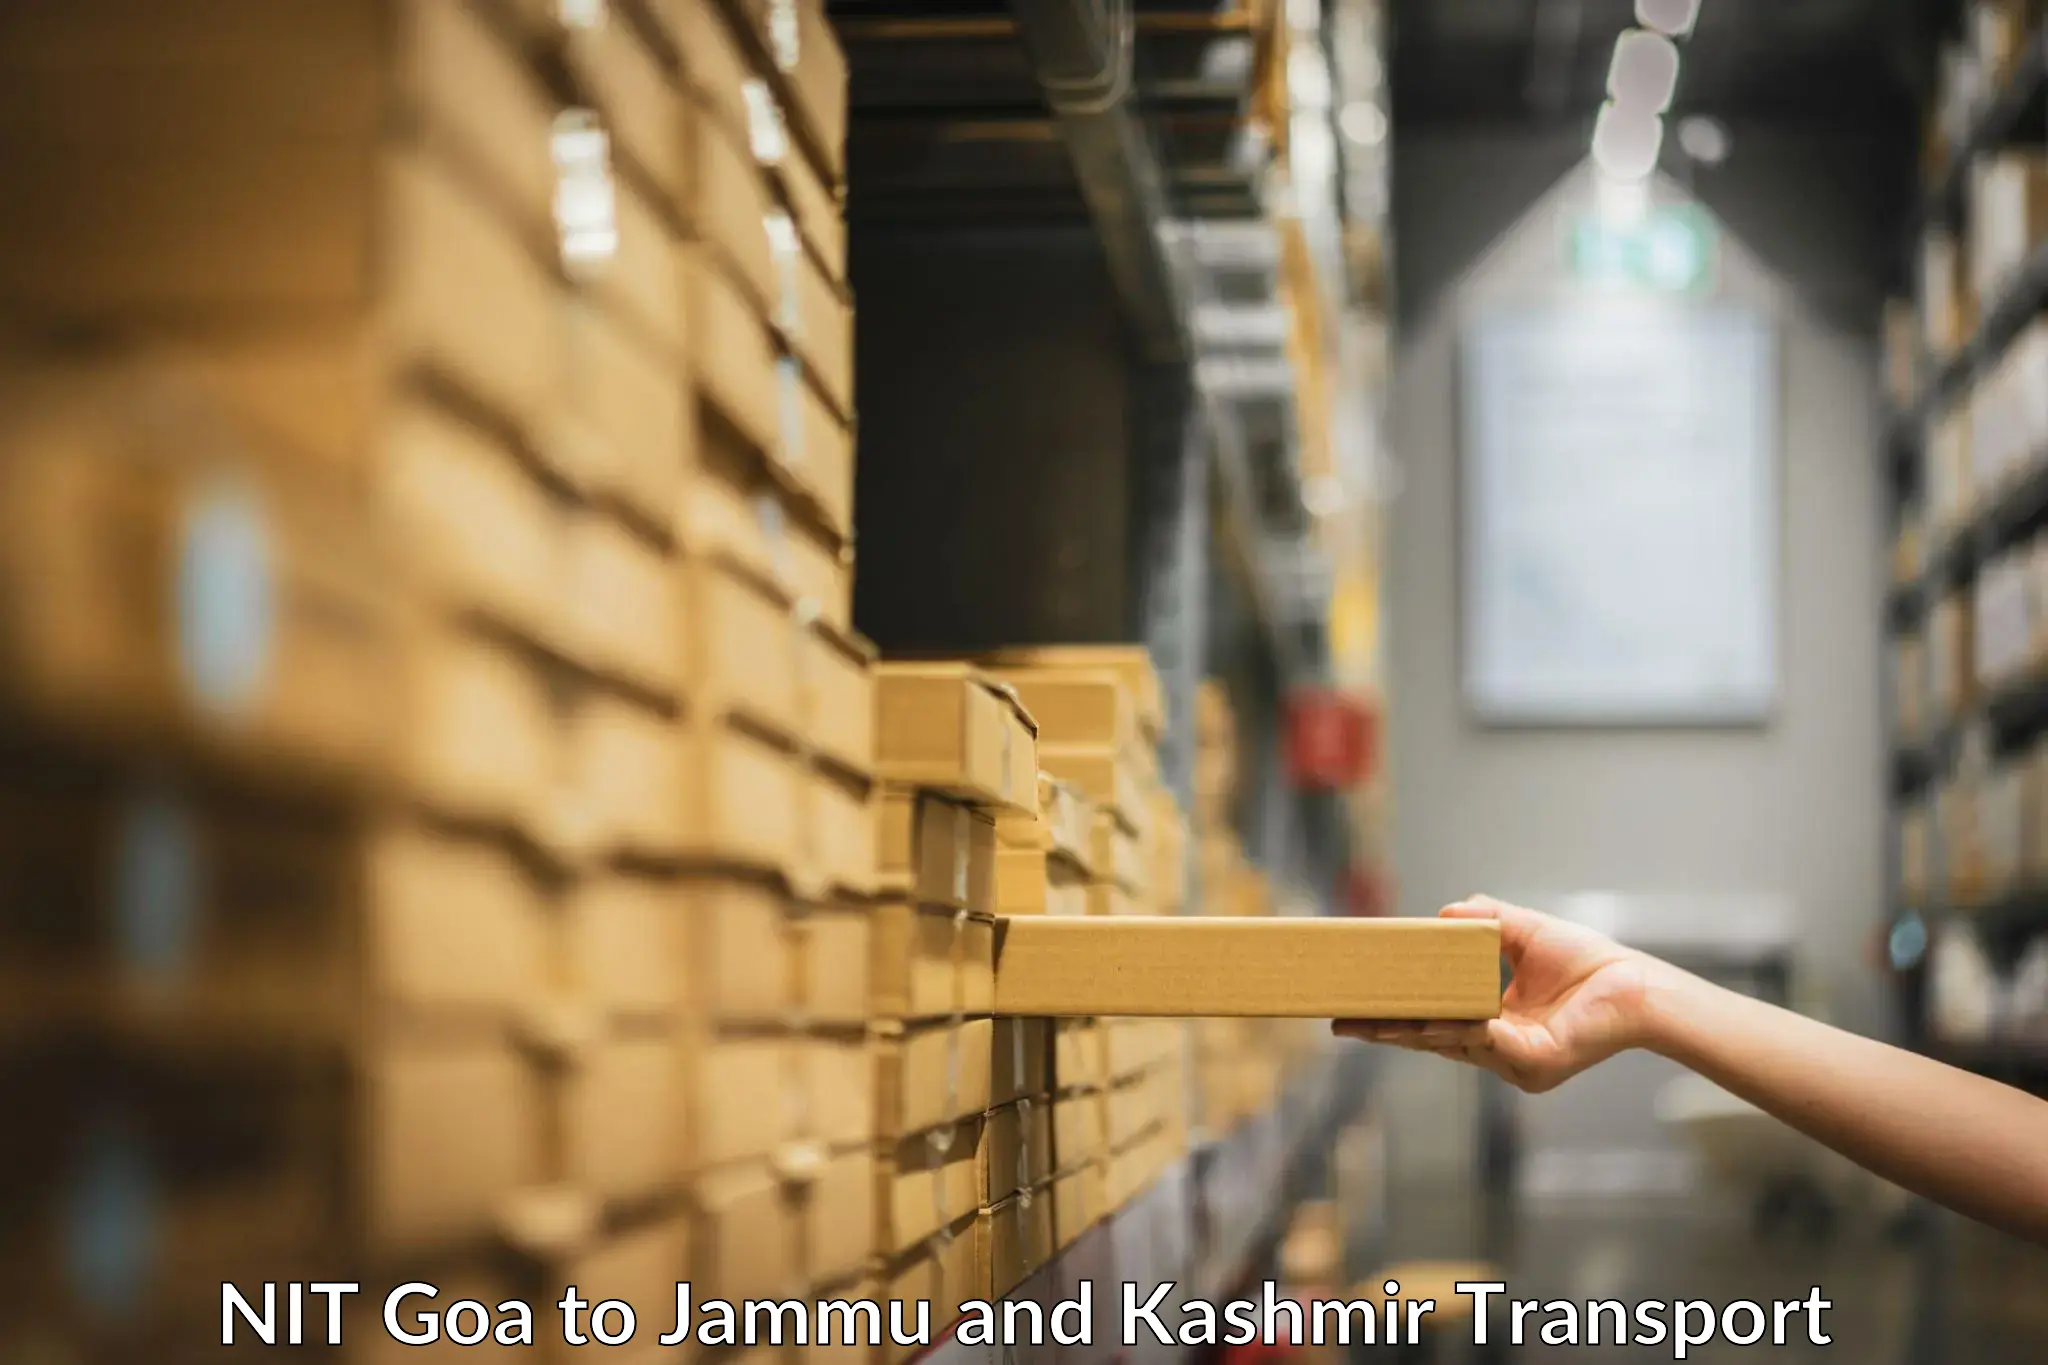 Transport services NIT Goa to Srinagar Kashmir